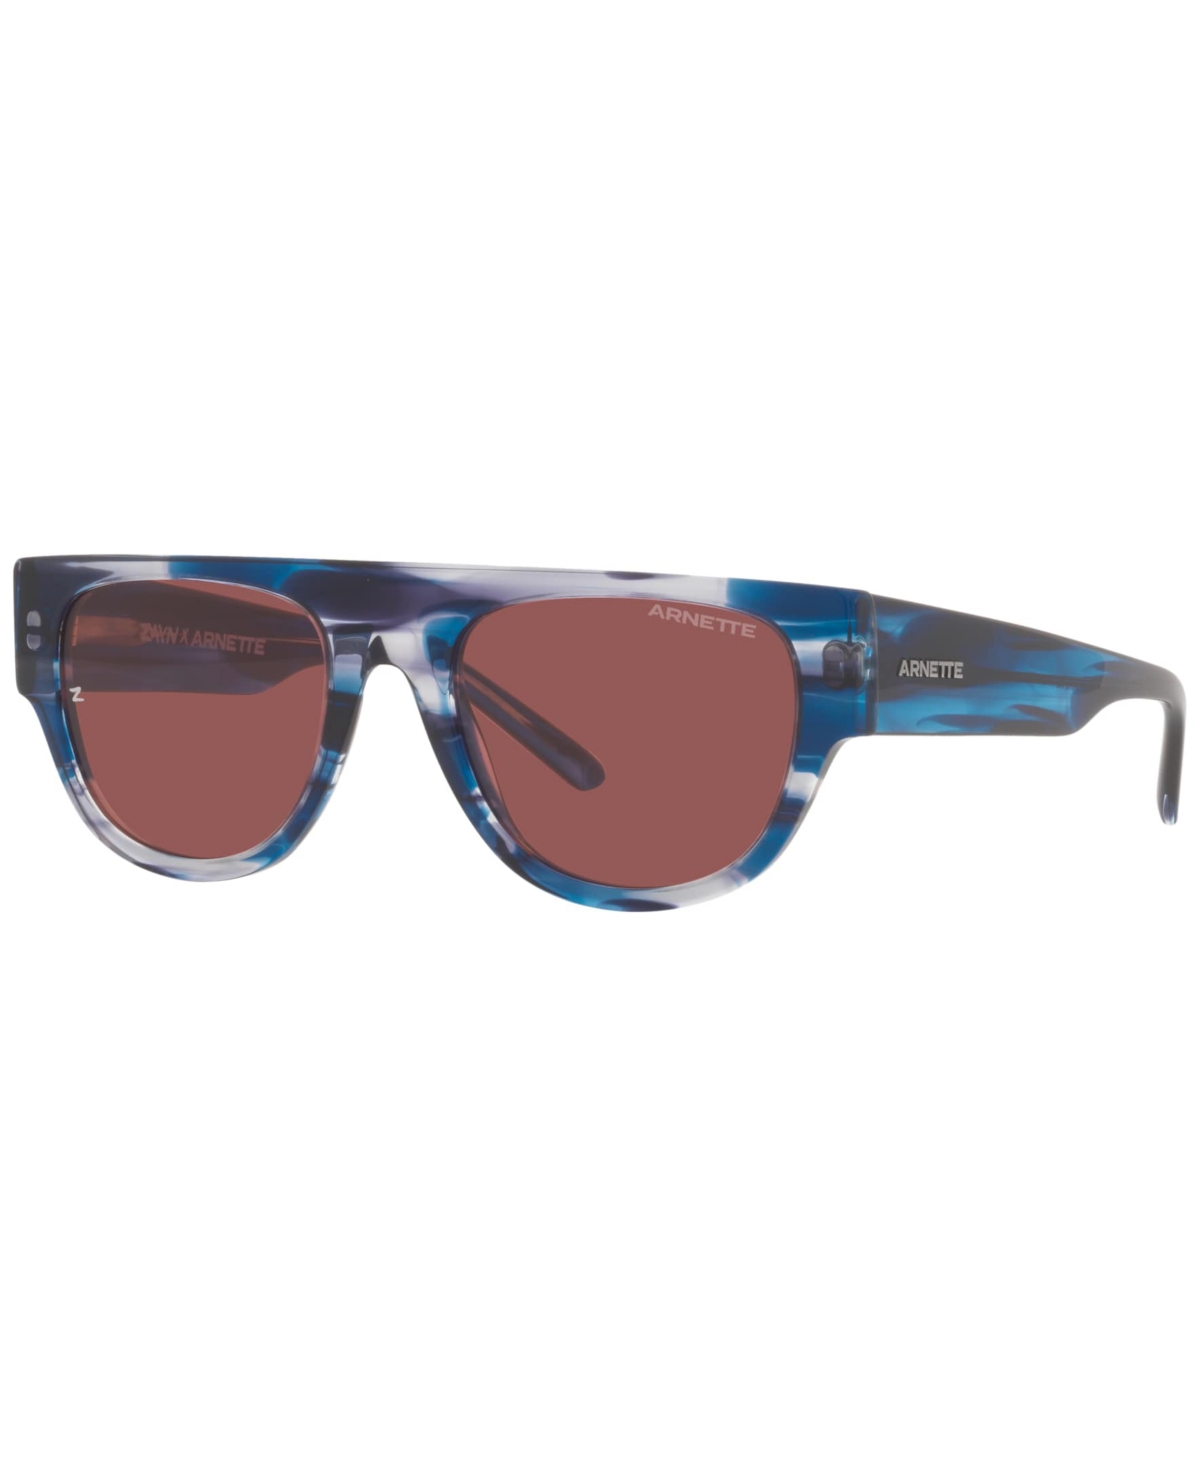 Unisex Sunglasses, AN4293 Gto 53 - Tie-Dye Blue